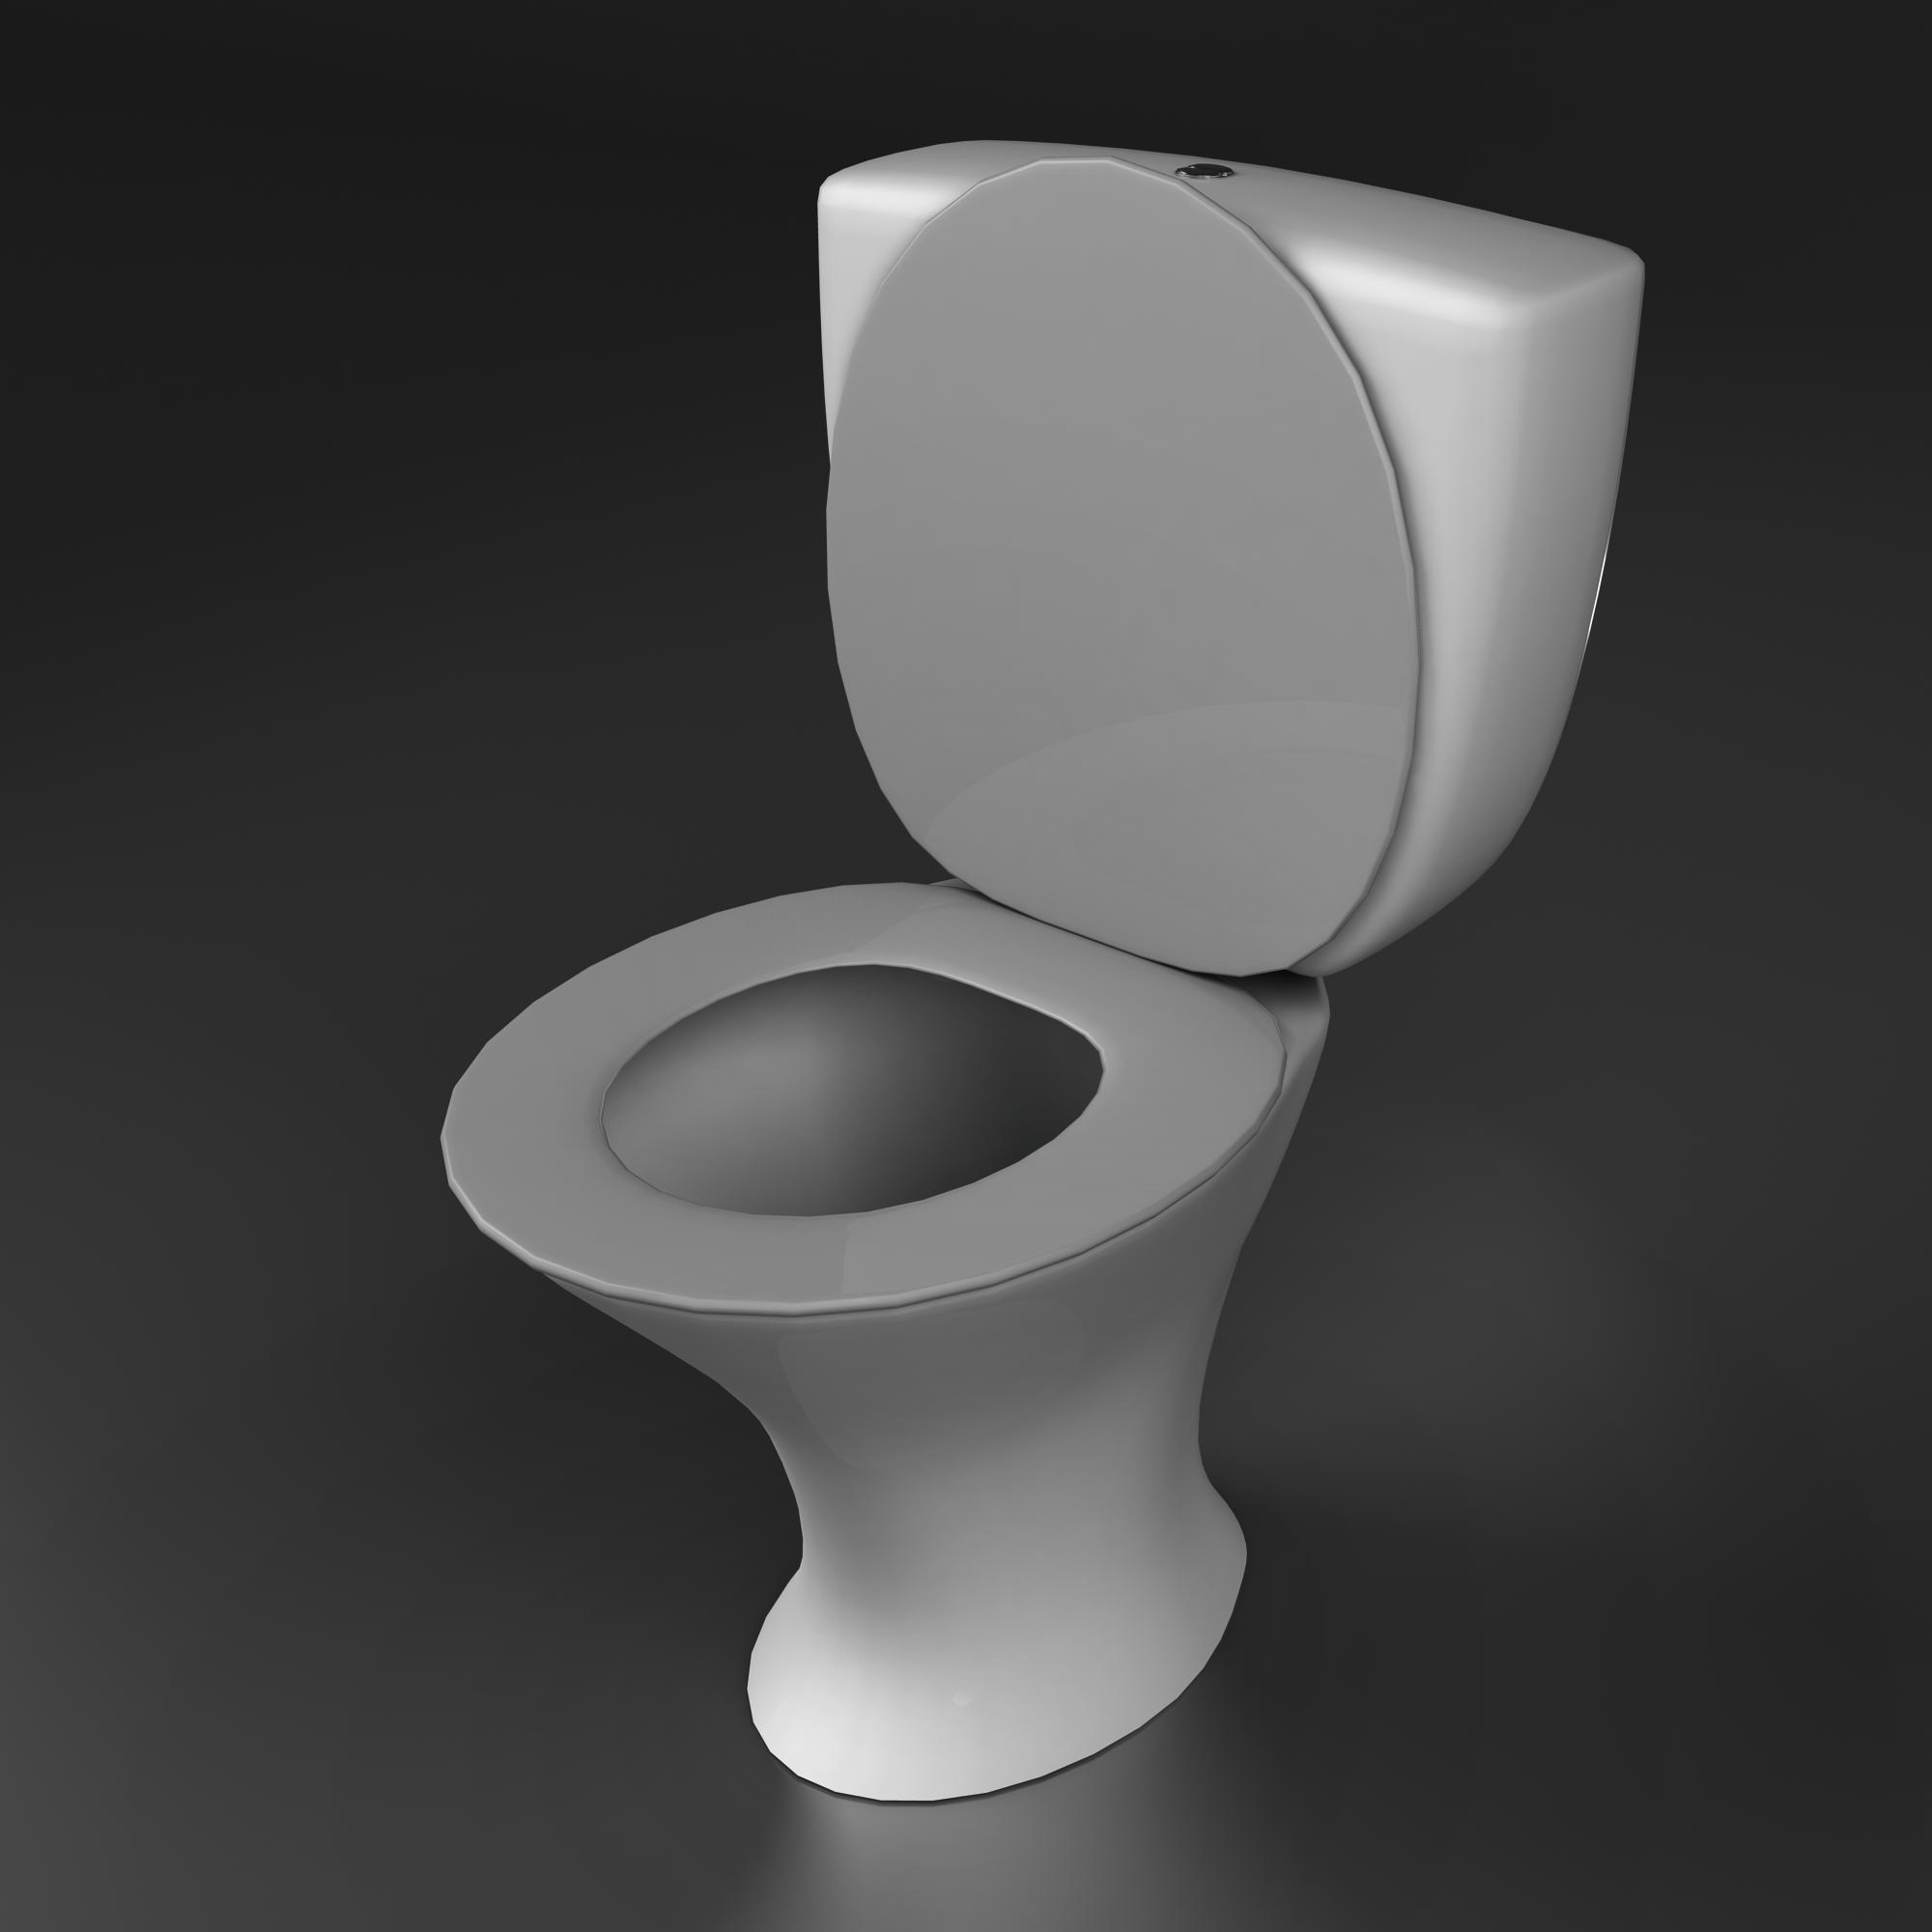 3 д модели скибиди туалетов